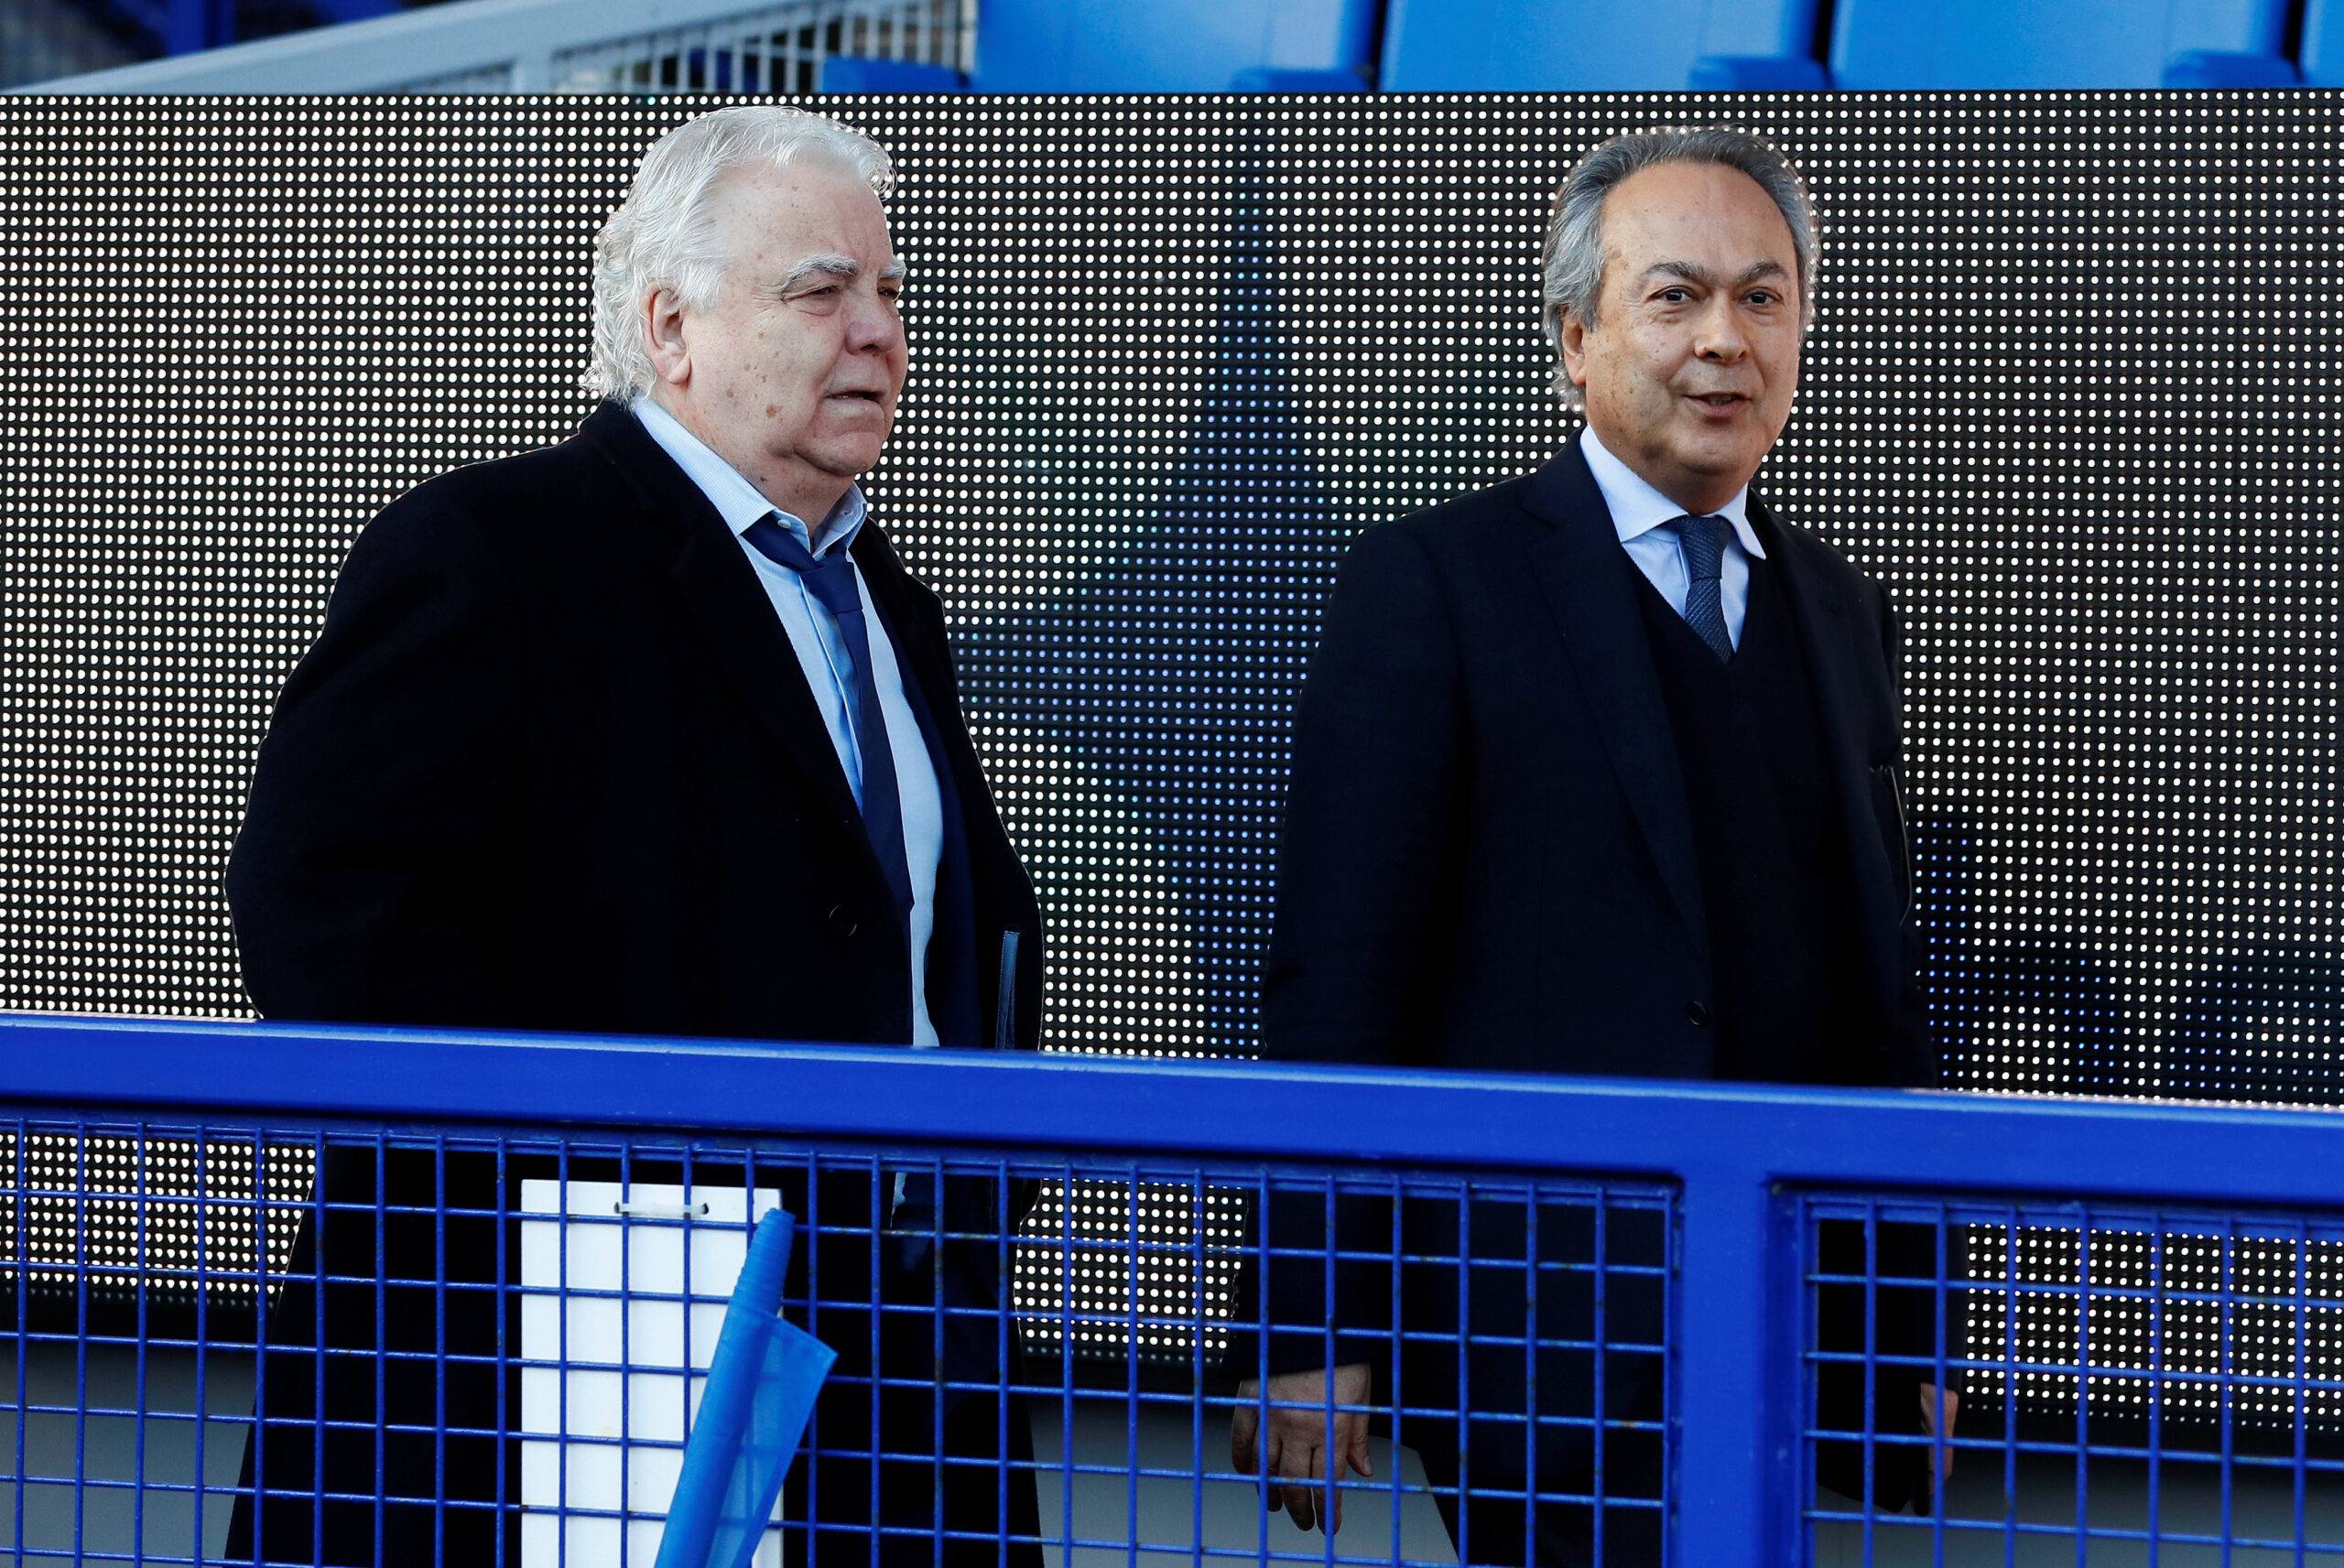 Everton chairman Bill Kenwright and owner Farhad Moshiri arriving at an Everton match